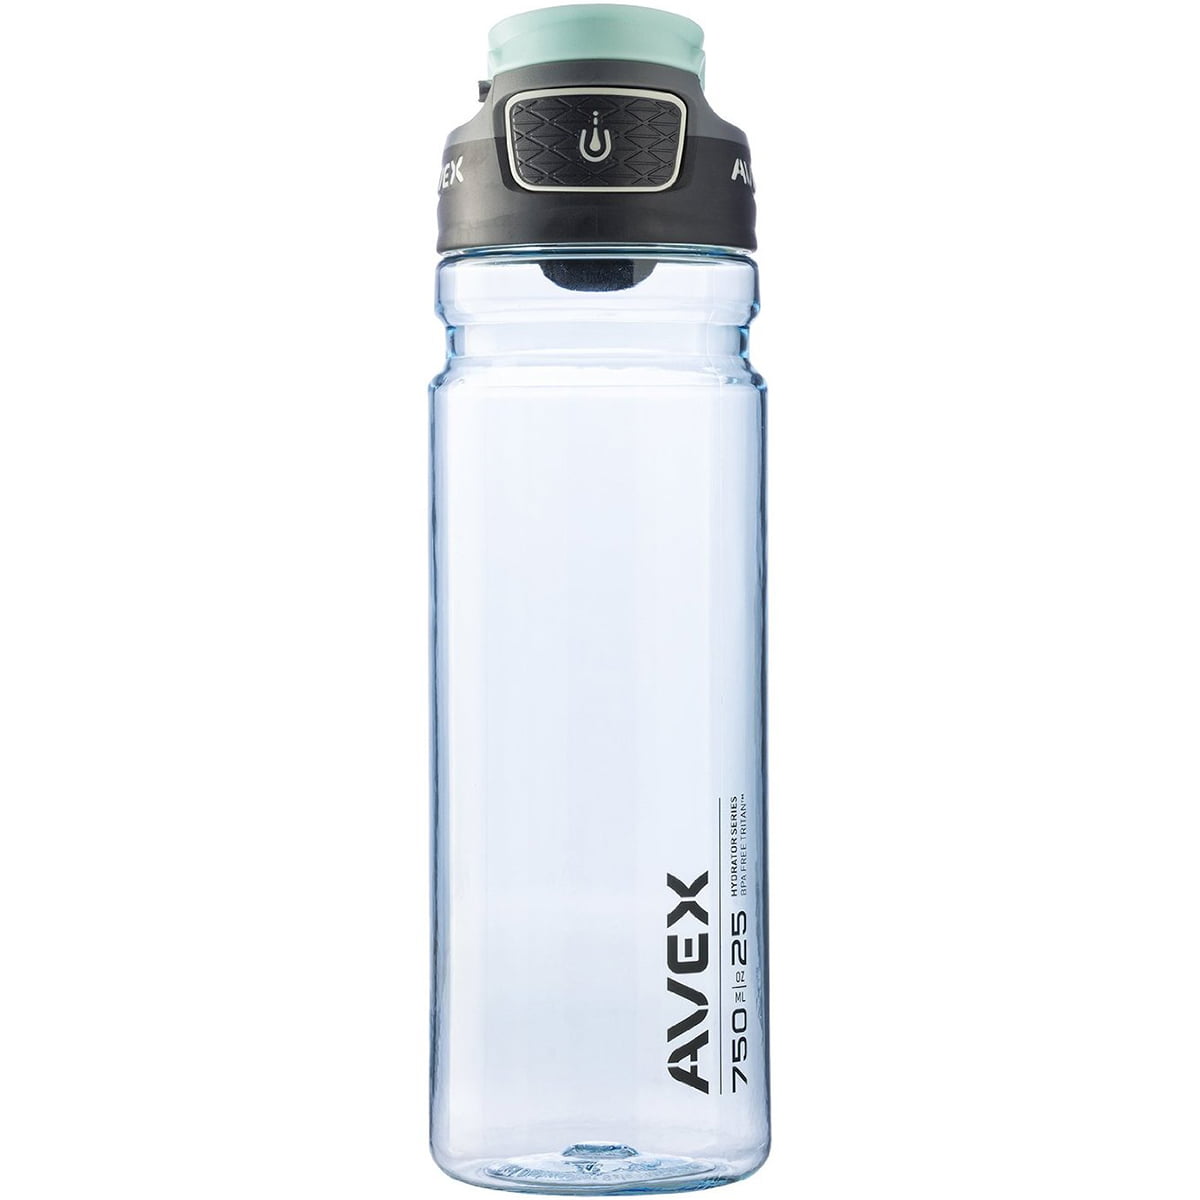 Avex 25 oz FreeFlow Autoseal Water Bottle- Burnt Orange | Camp Sunshine